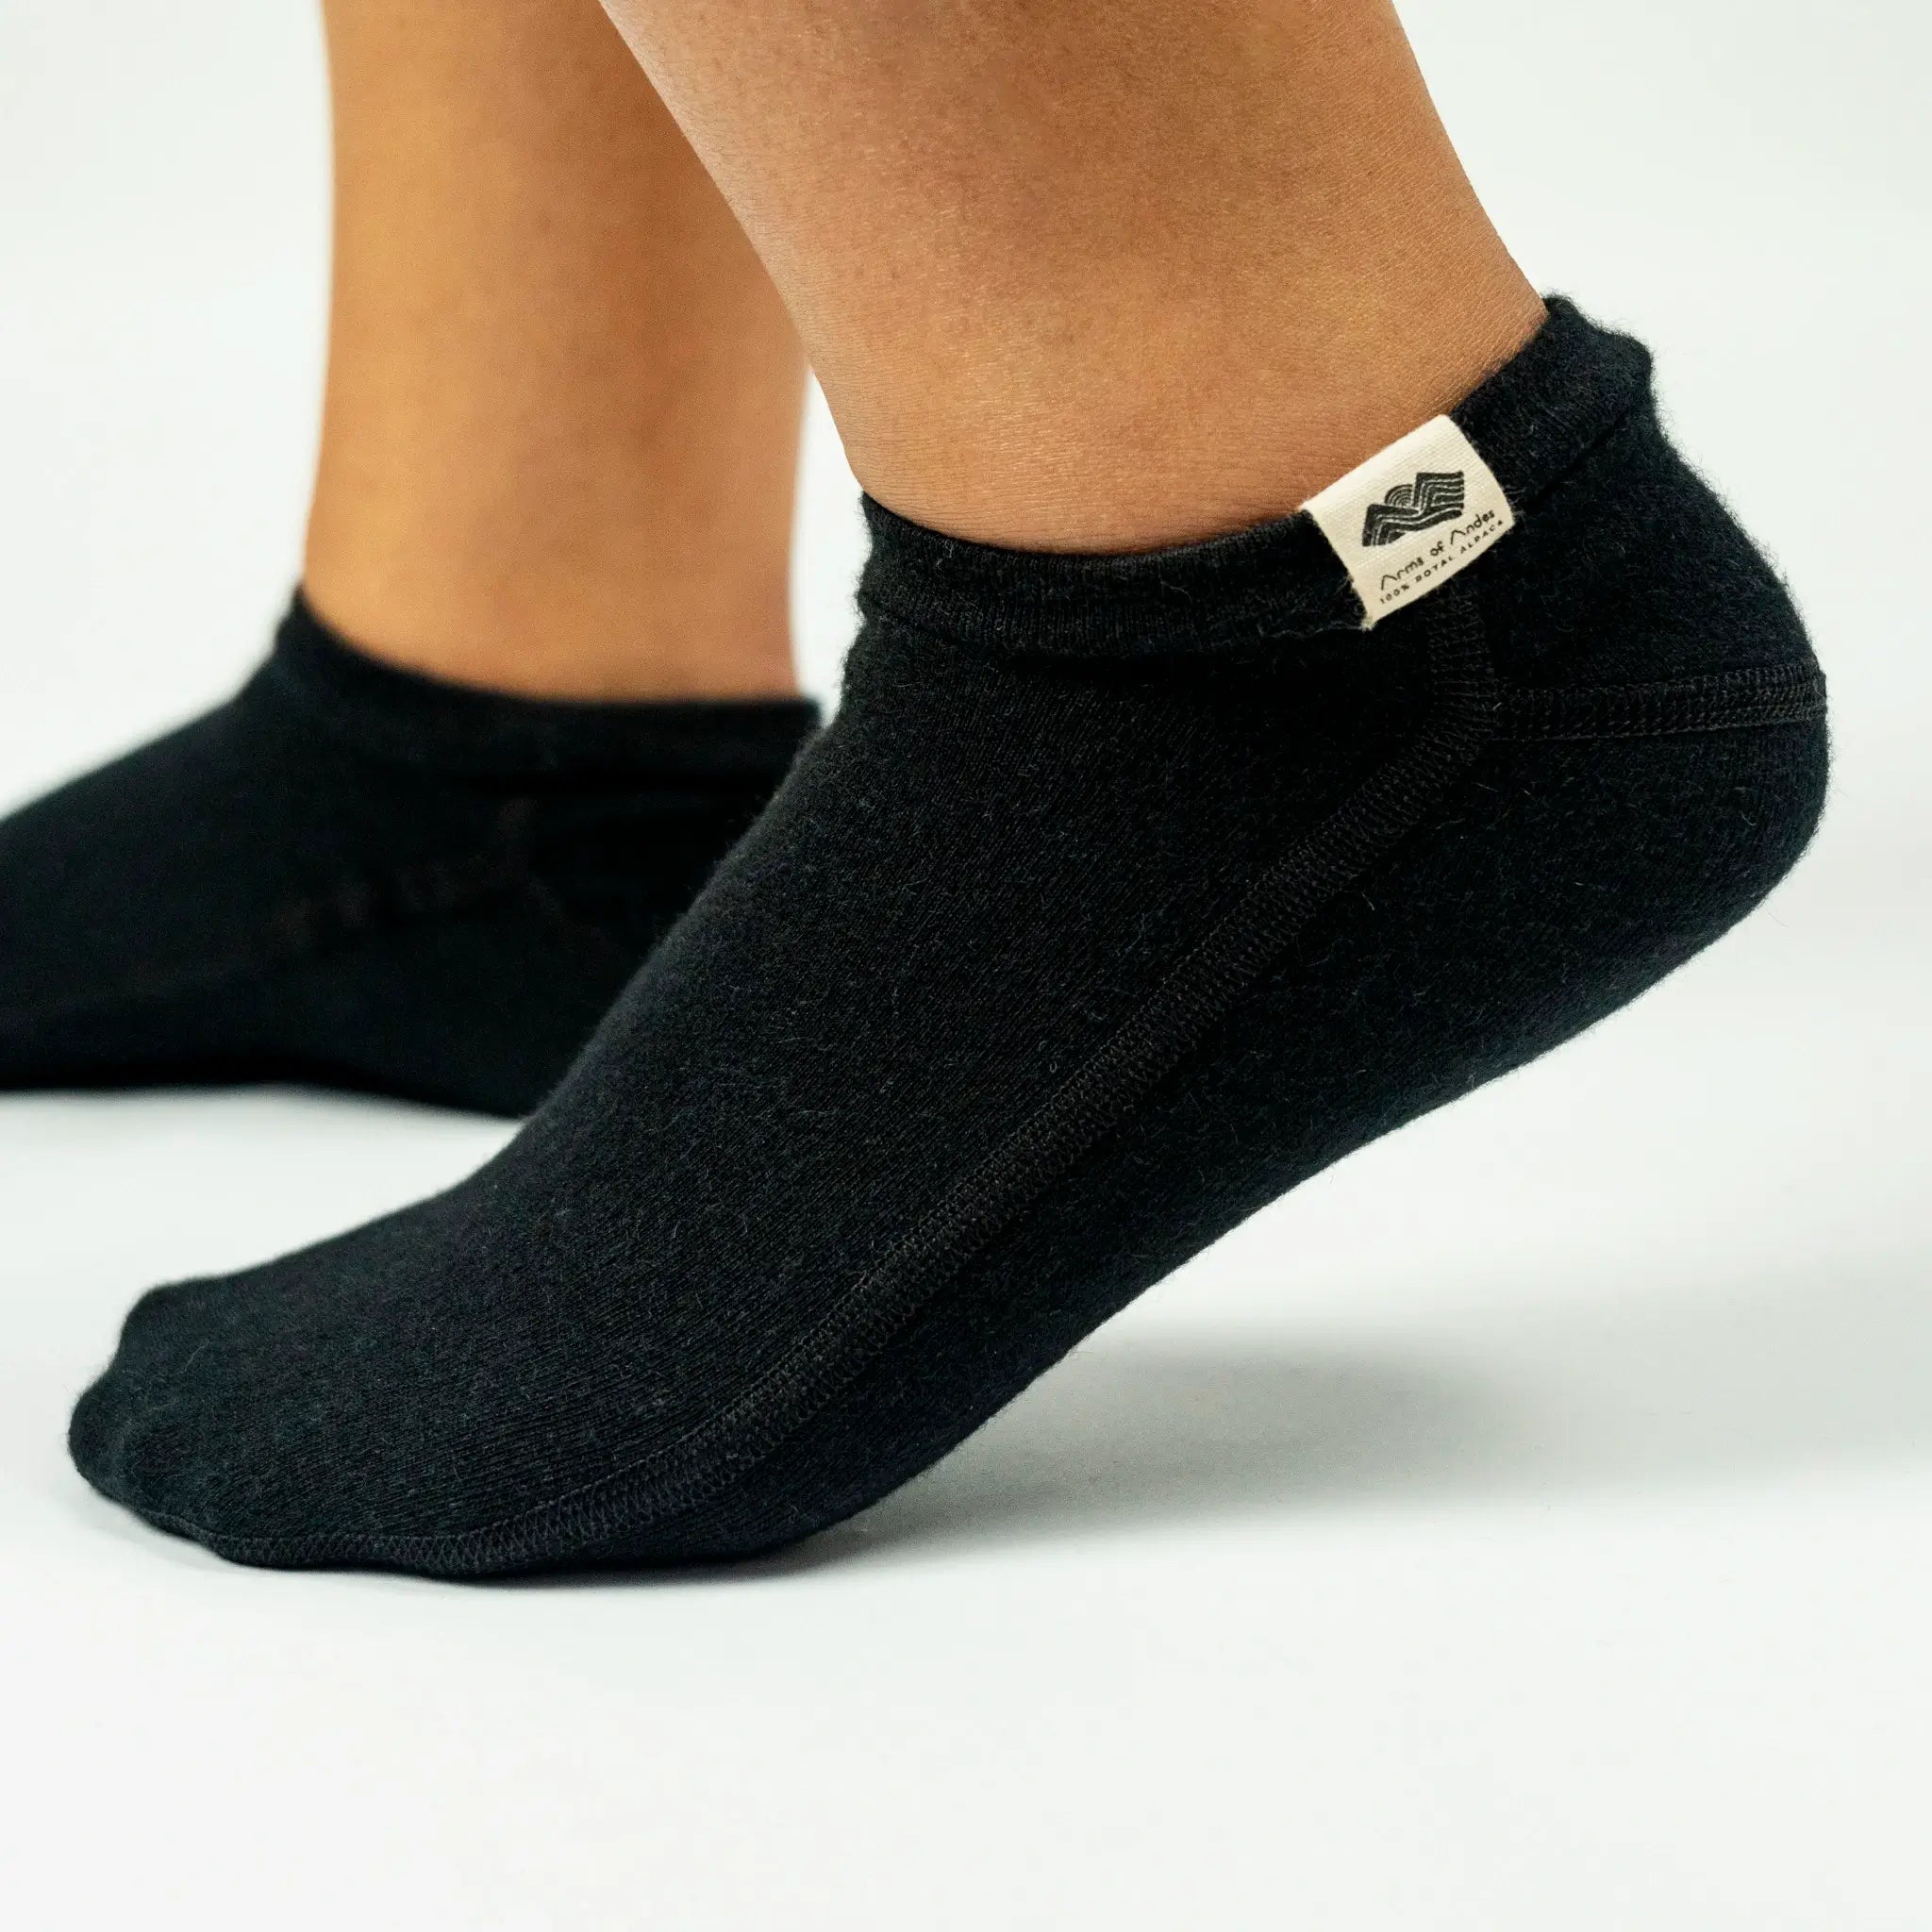 unisex slipper socks all activities color black